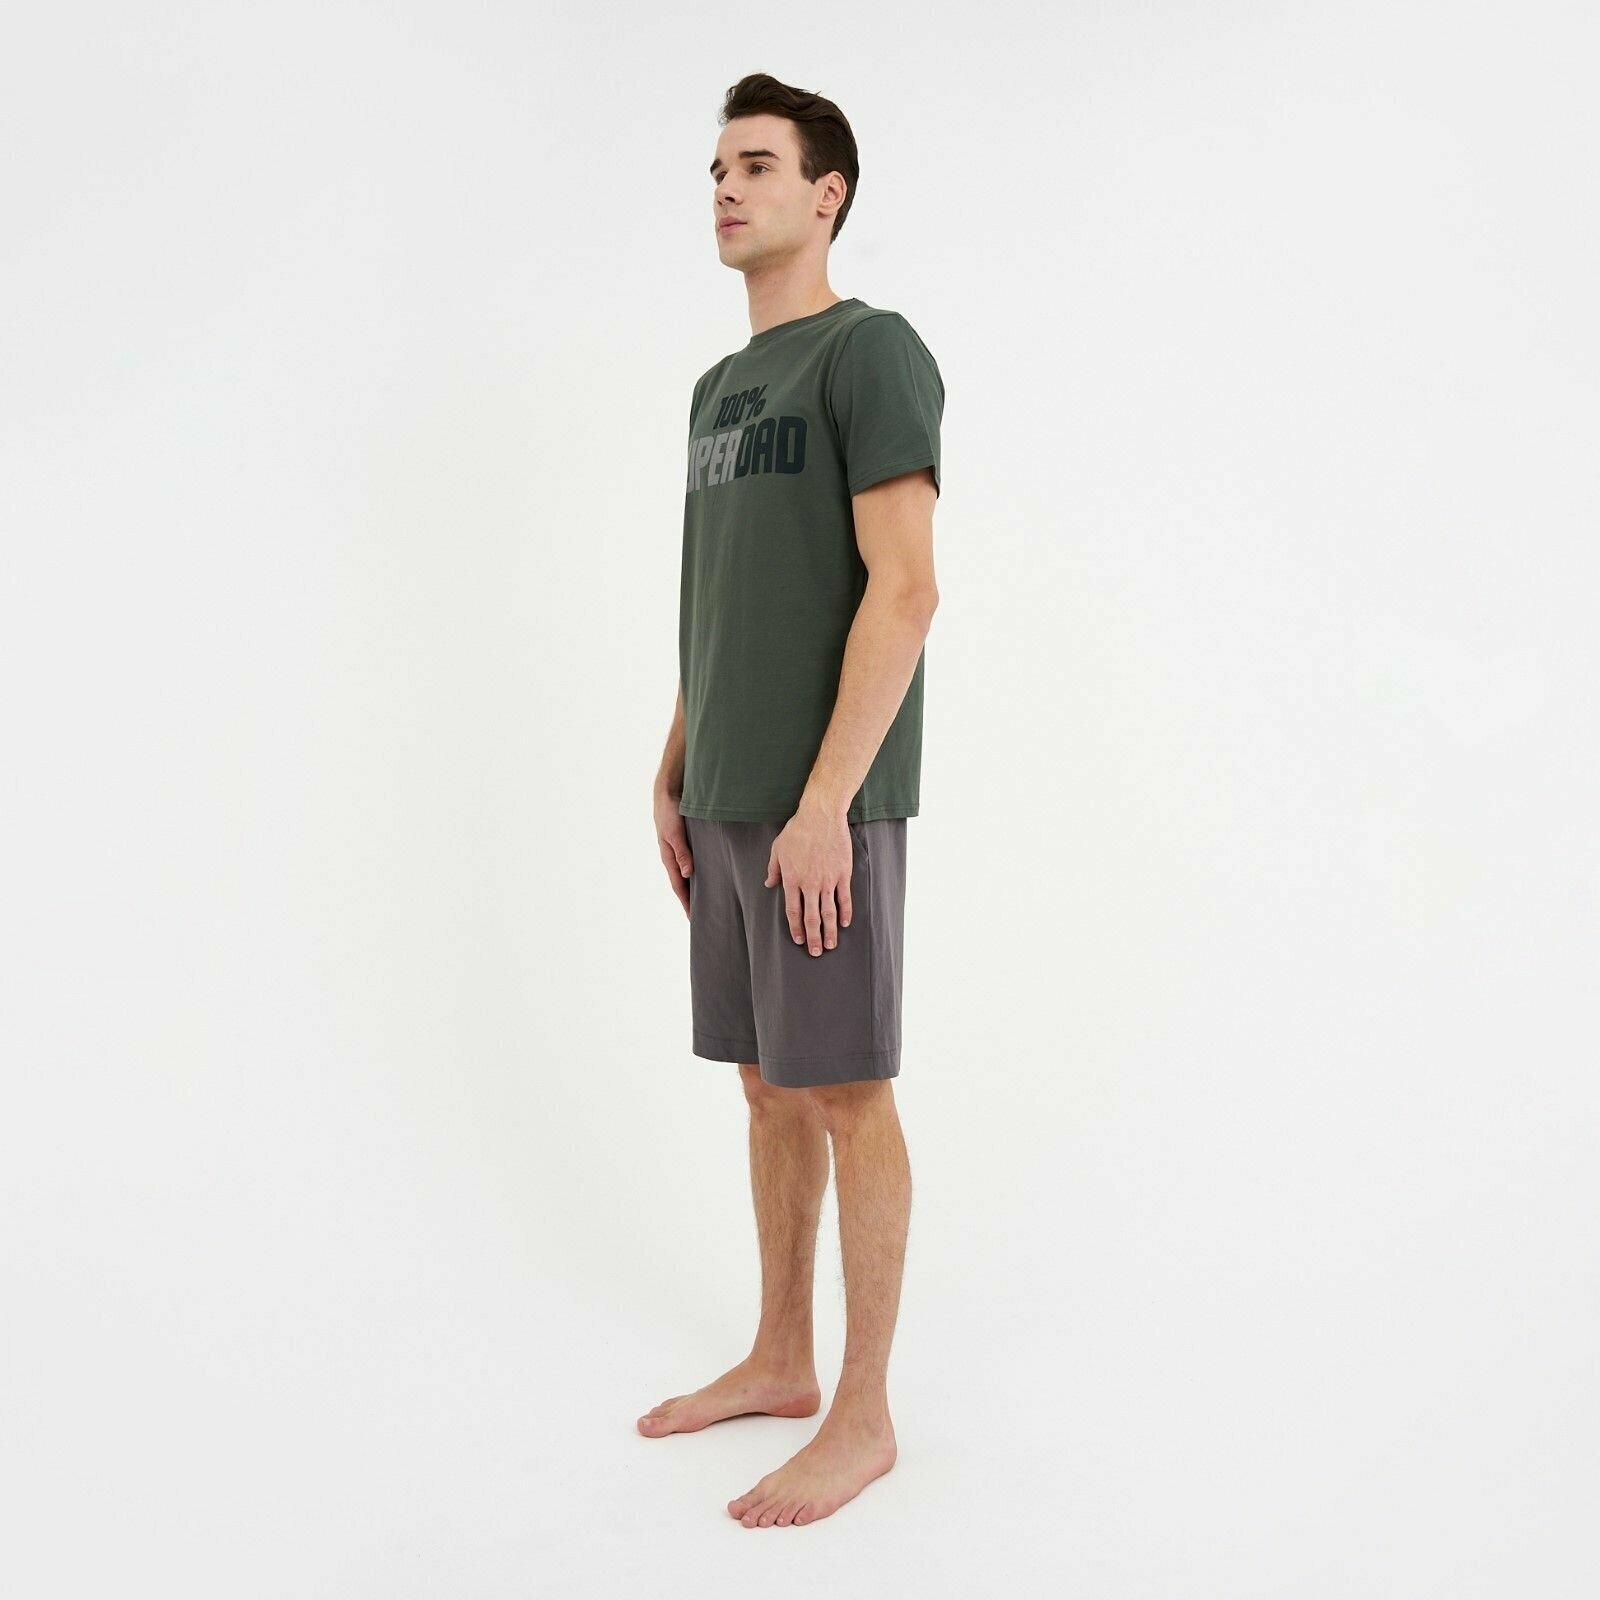 Пижама Kaftan, футболка, шорты, размер 54, зеленый - фотография № 3